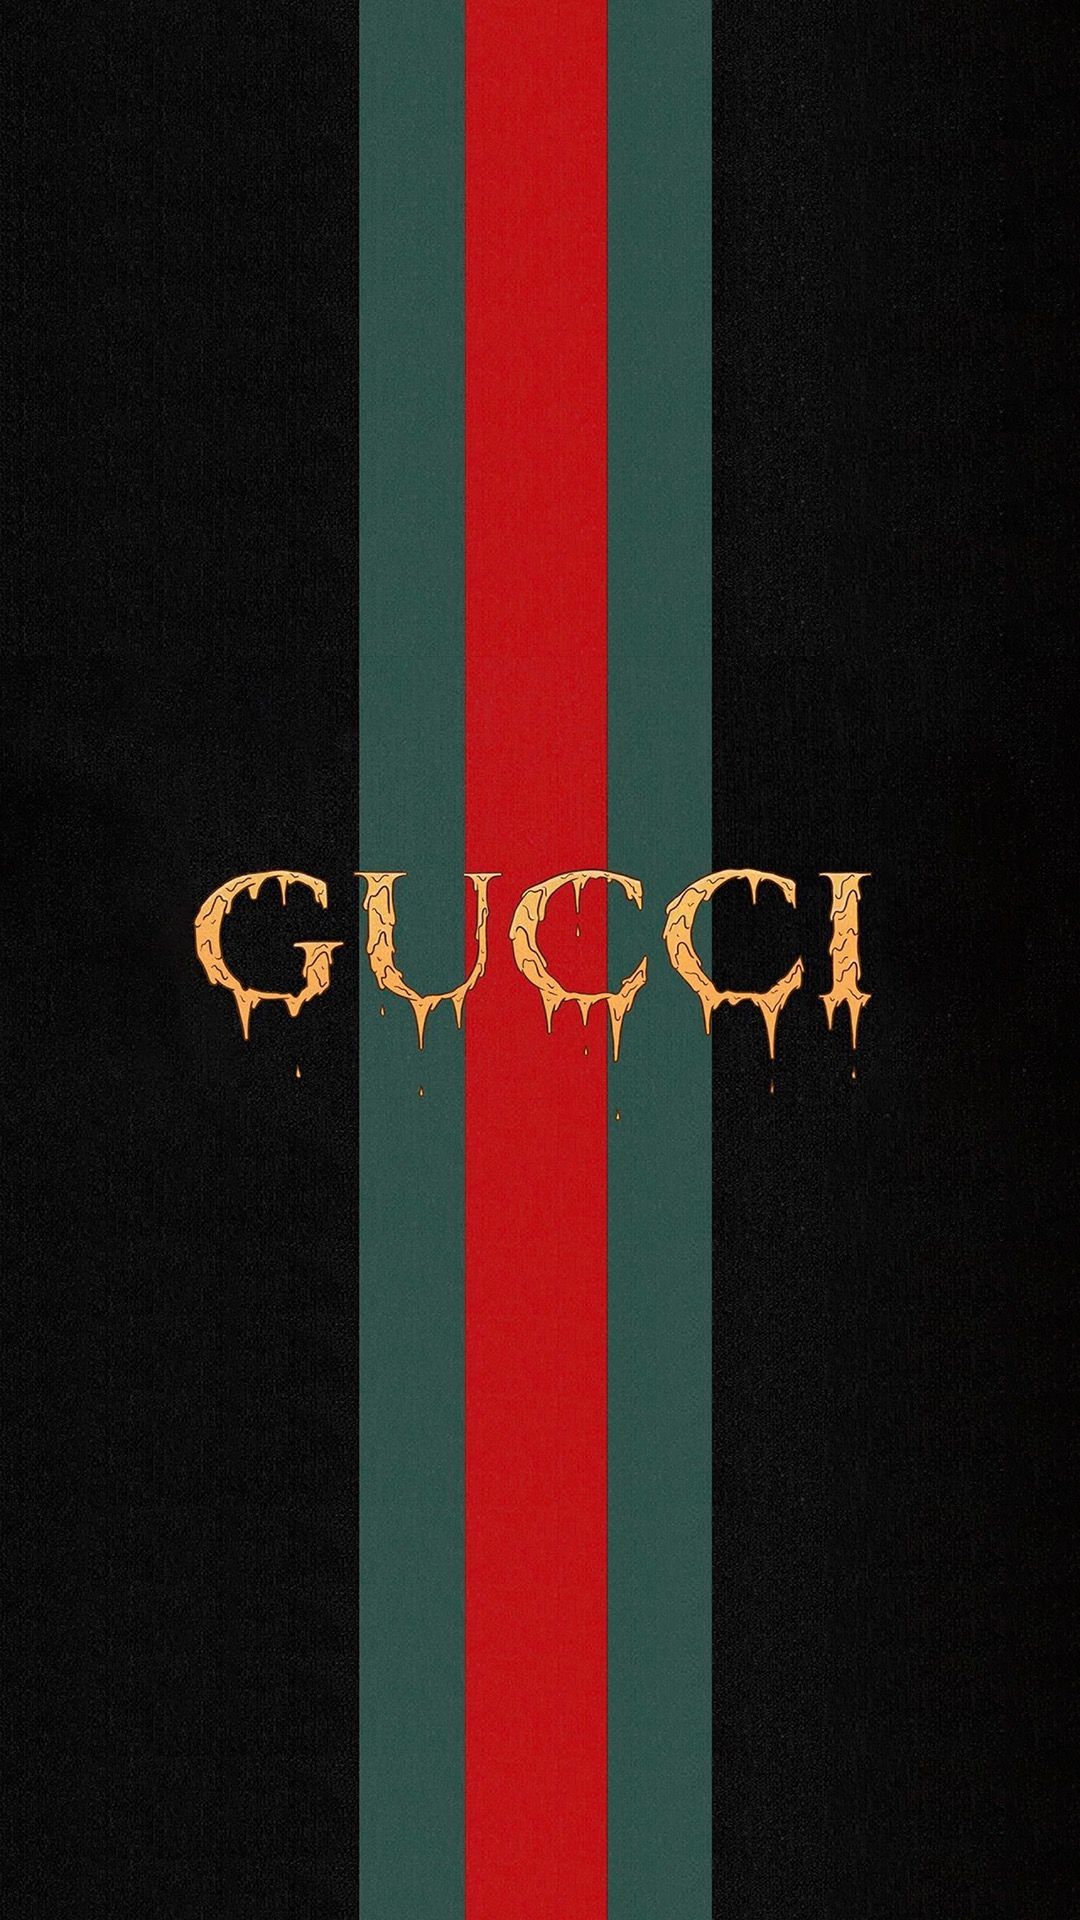 Gucci ブランドのiphone壁紙 Iphone Wallpapers